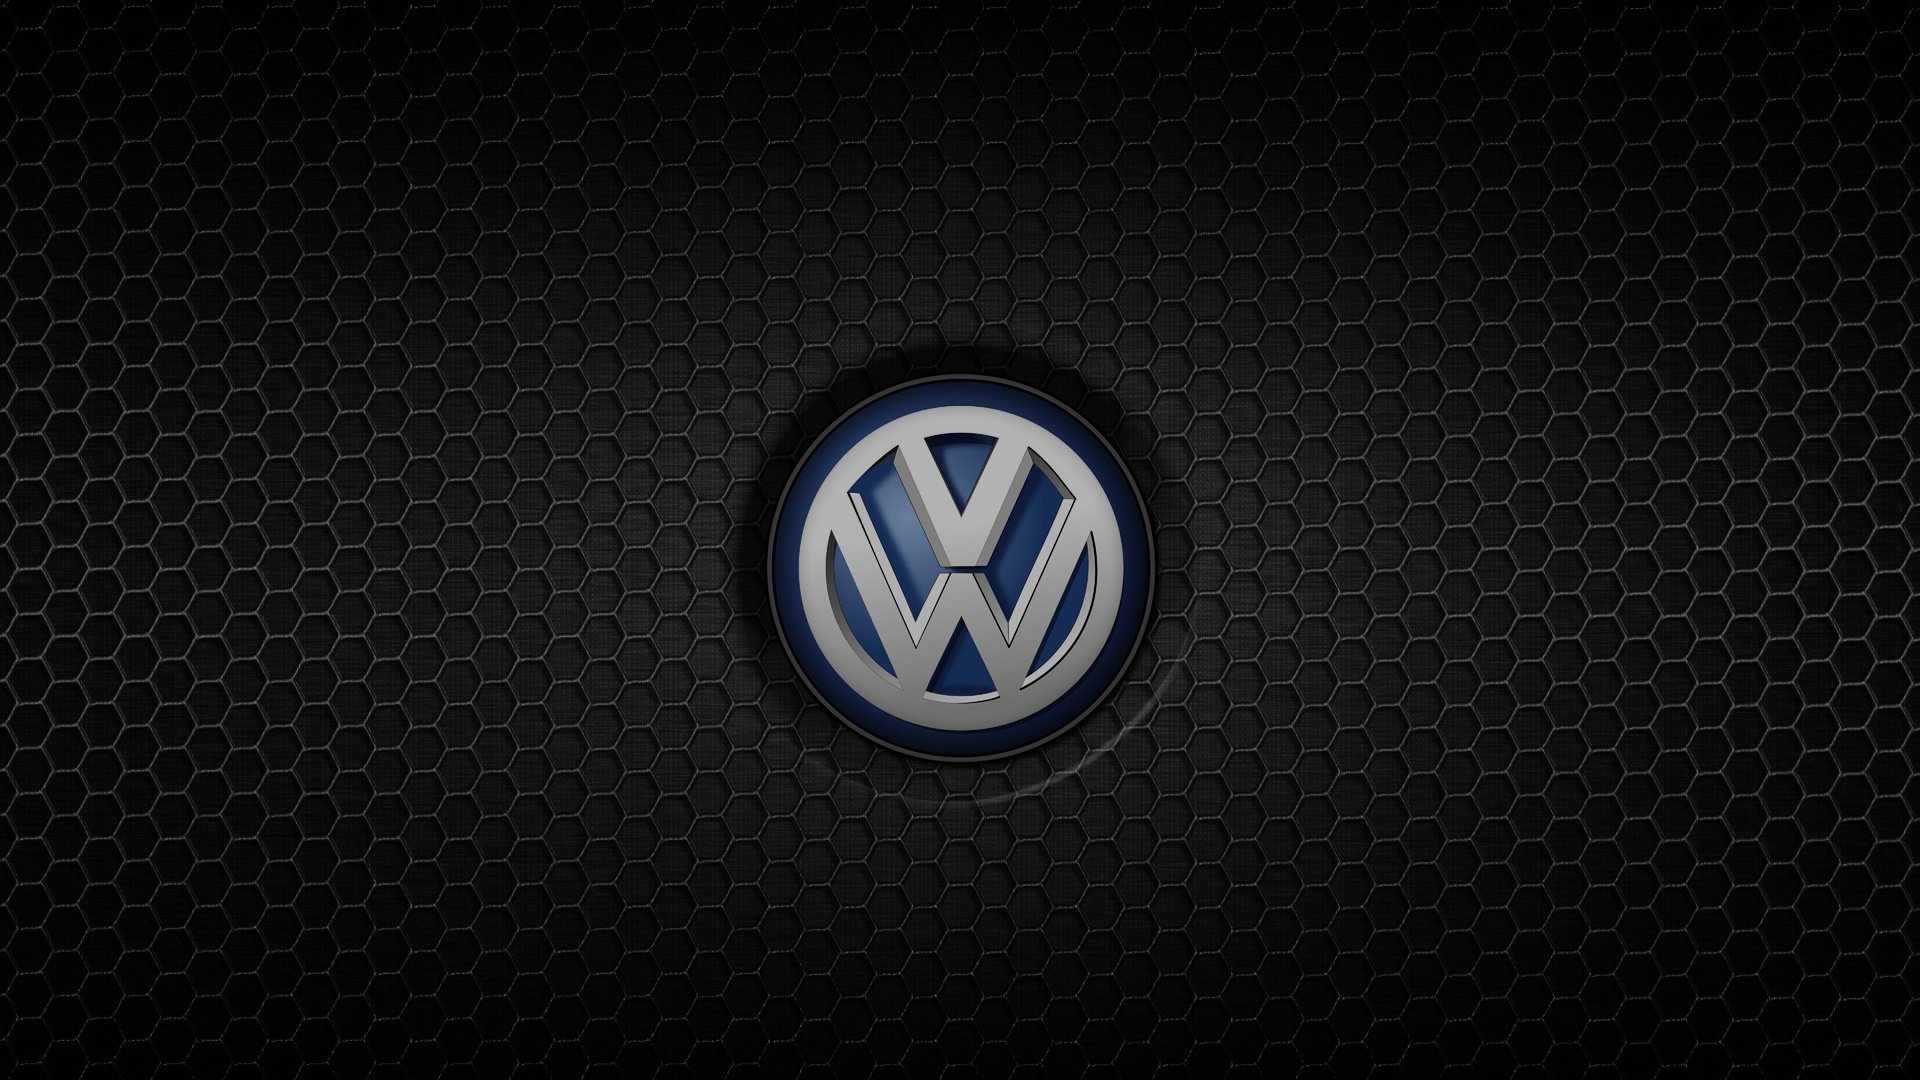 Фольксваген VAG. Заставка Фольксваген. Обои VW. Volkswagen логотип. Обои volkswagen